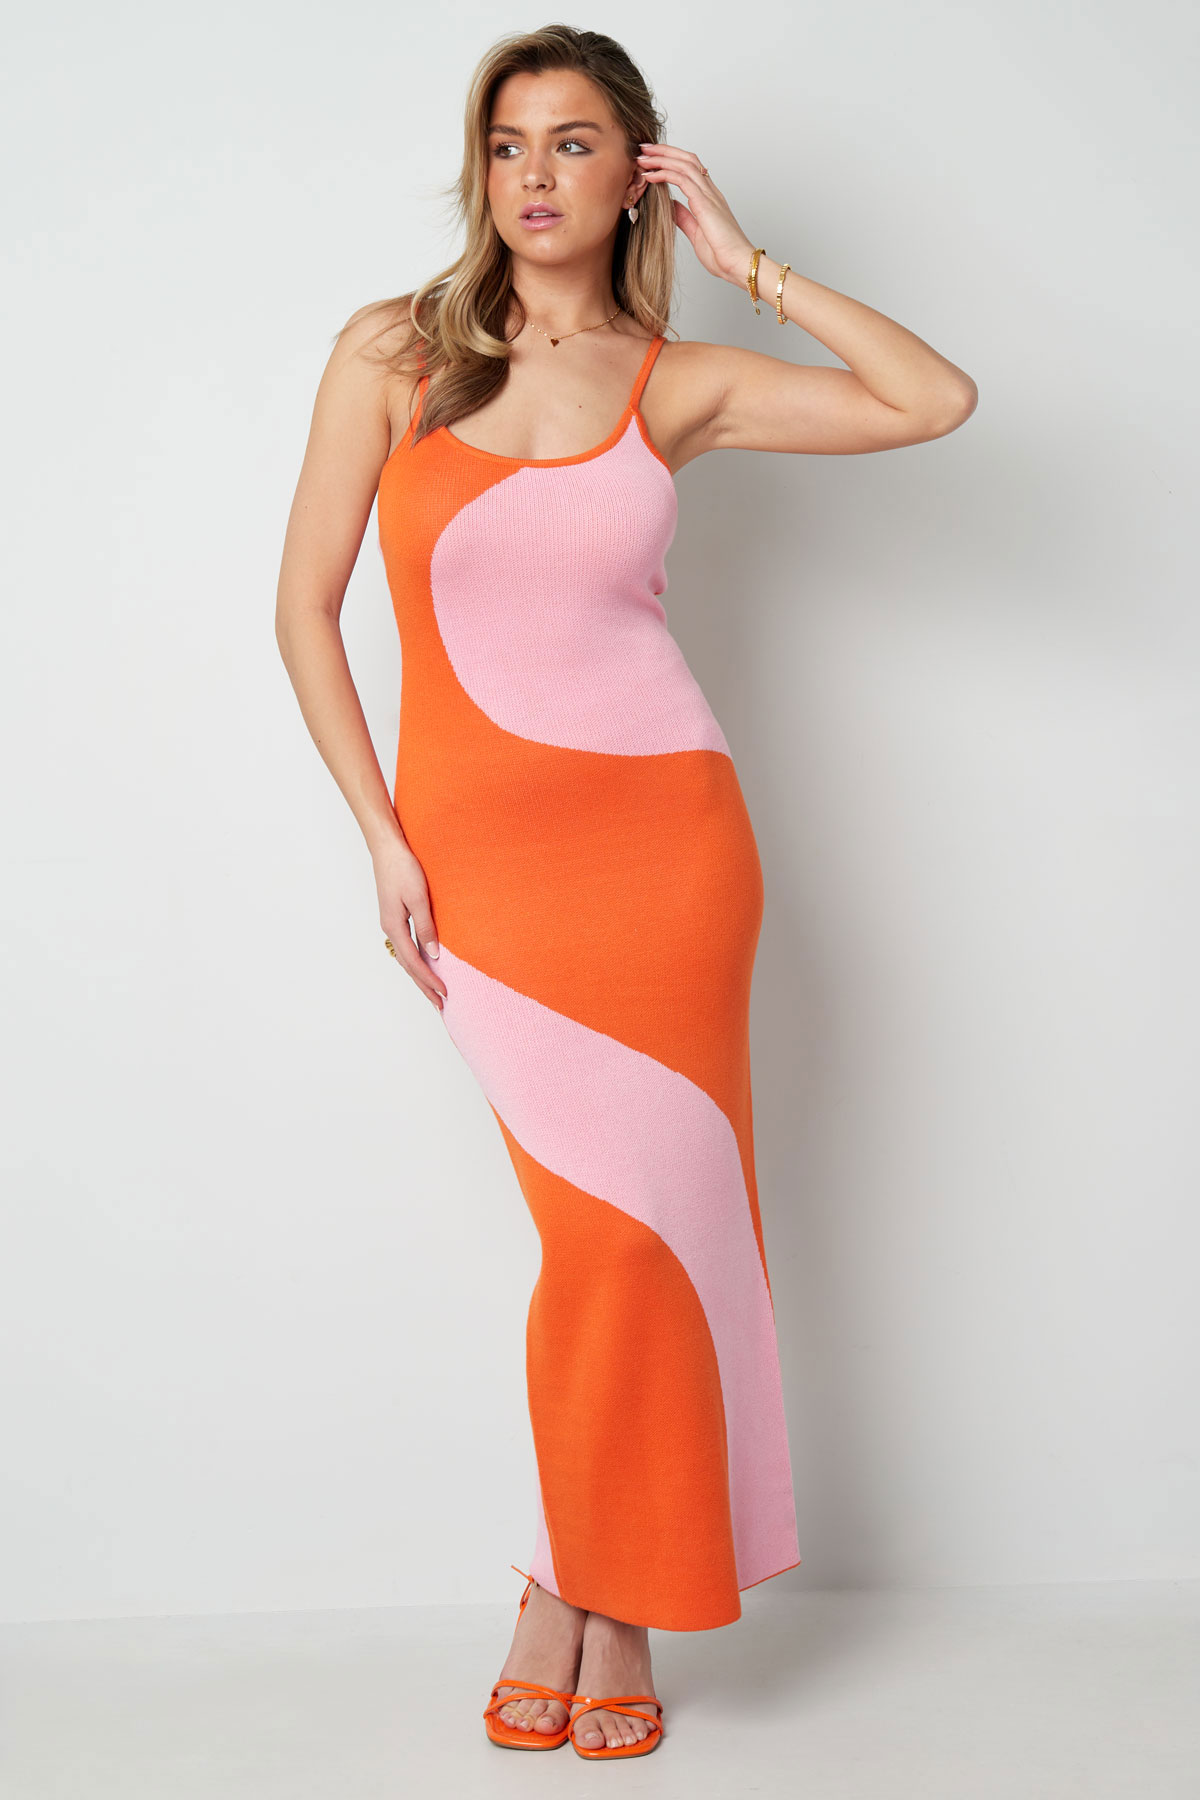 Organik desenli elbise - pembe turuncu h5 Resim2